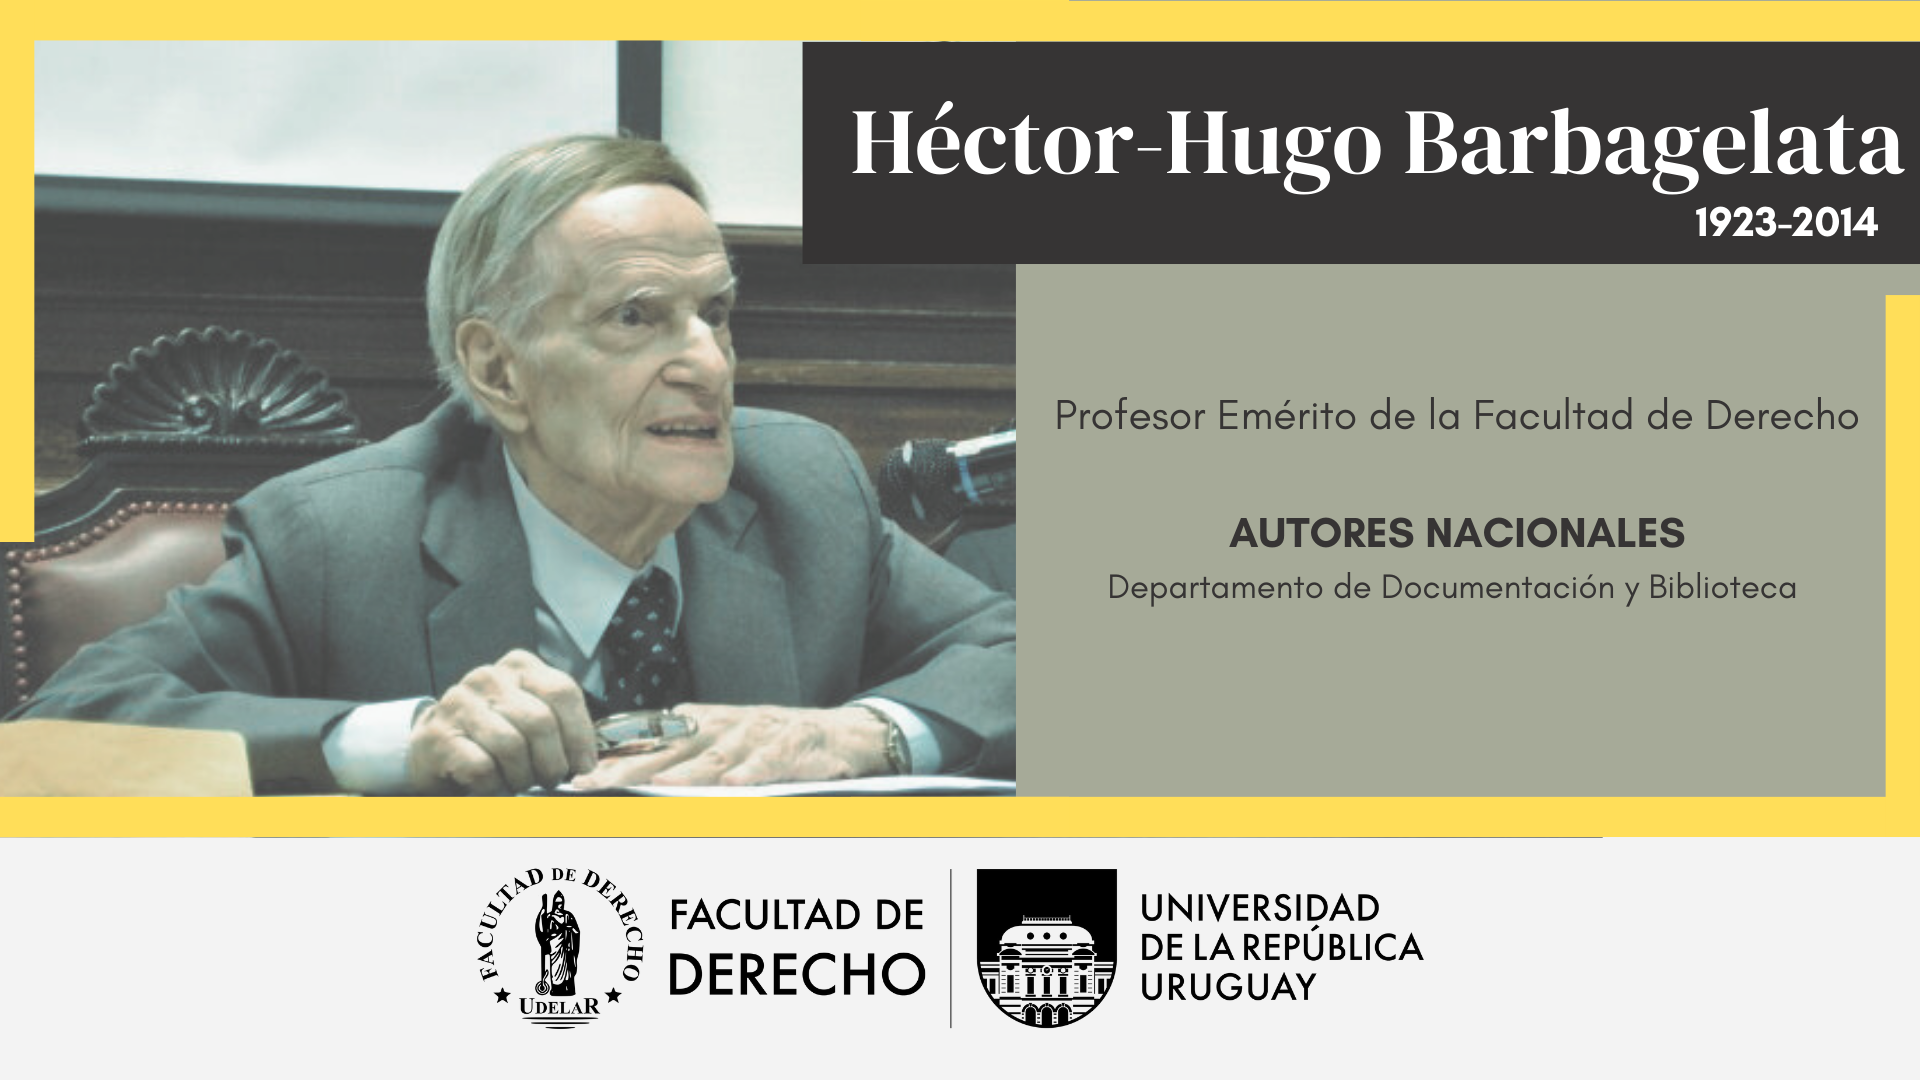 Héctor-Hugo Barbagelata